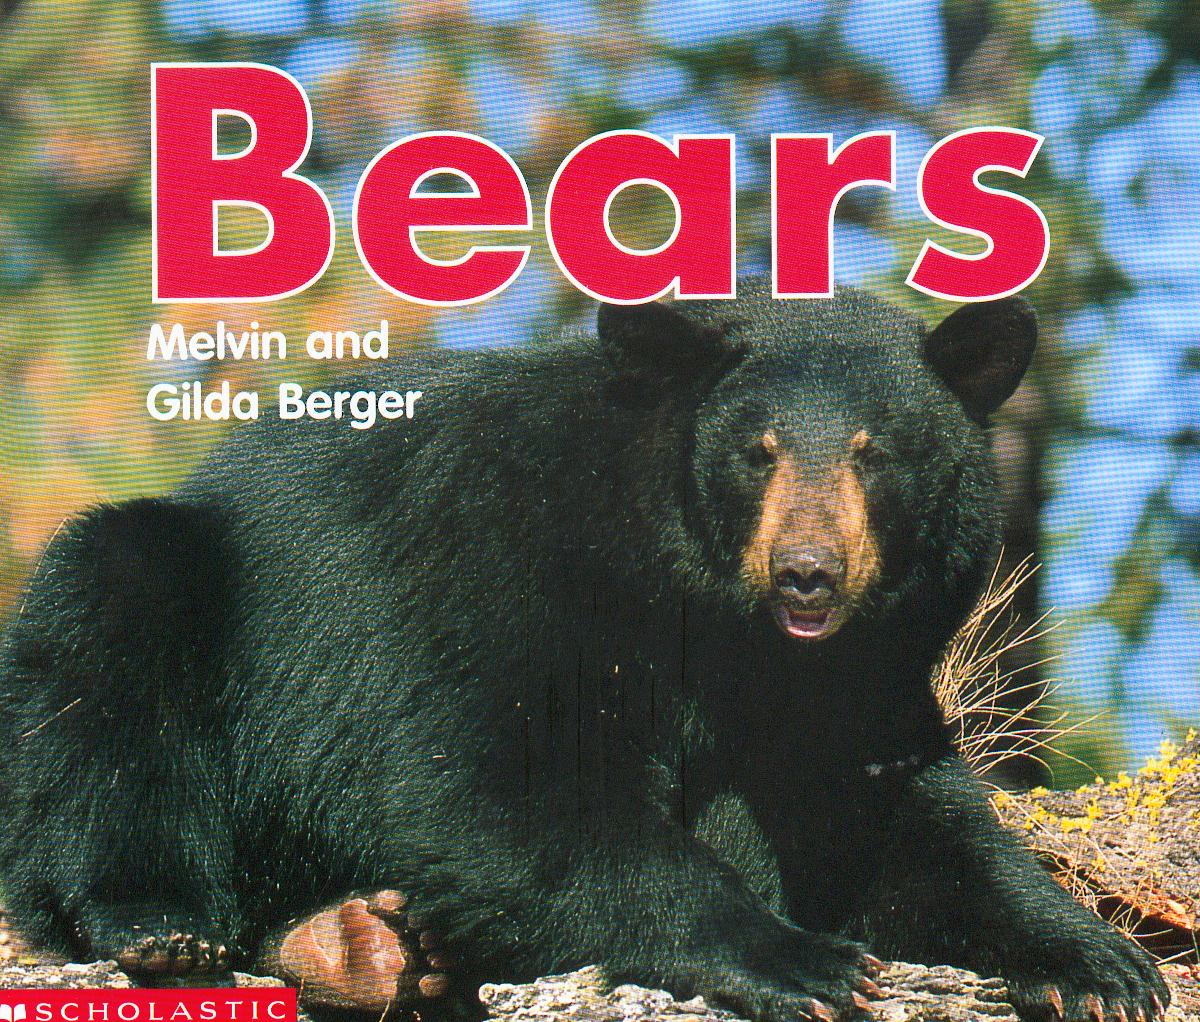 Bears / Melvin and Gilda Berger.